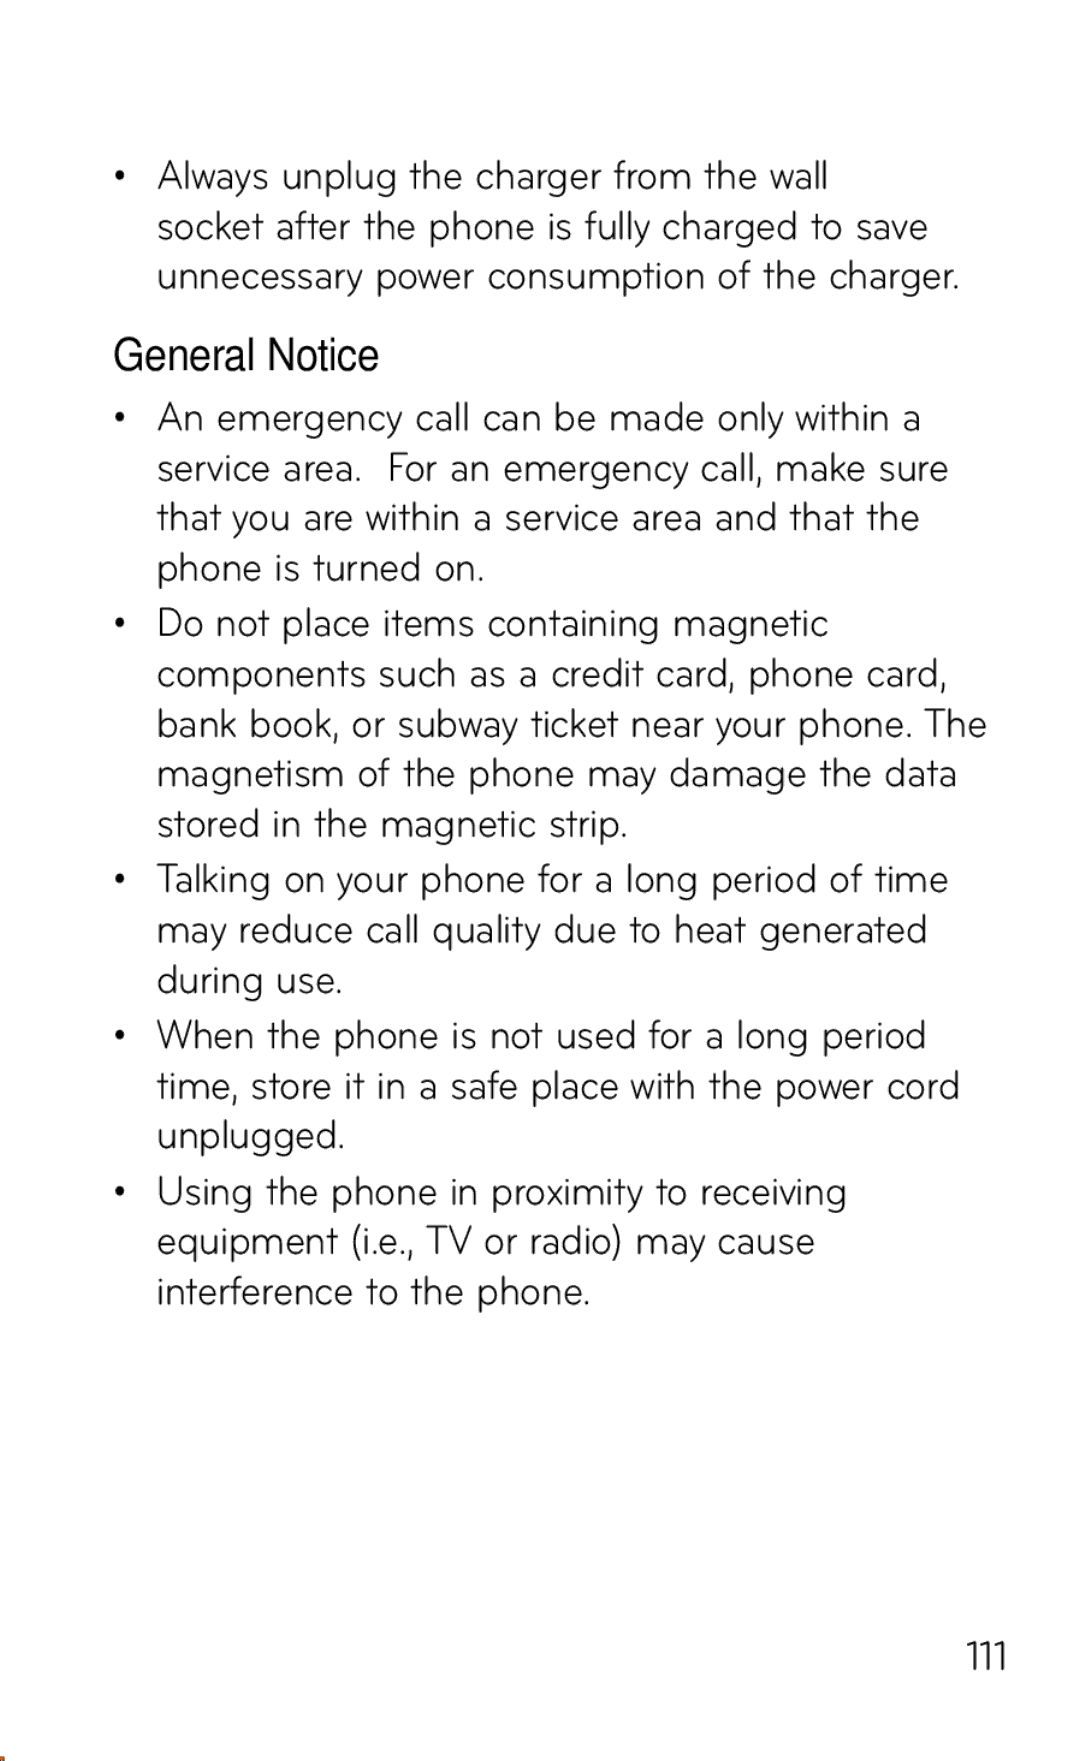 LG Electronics E739 manual General Notice 